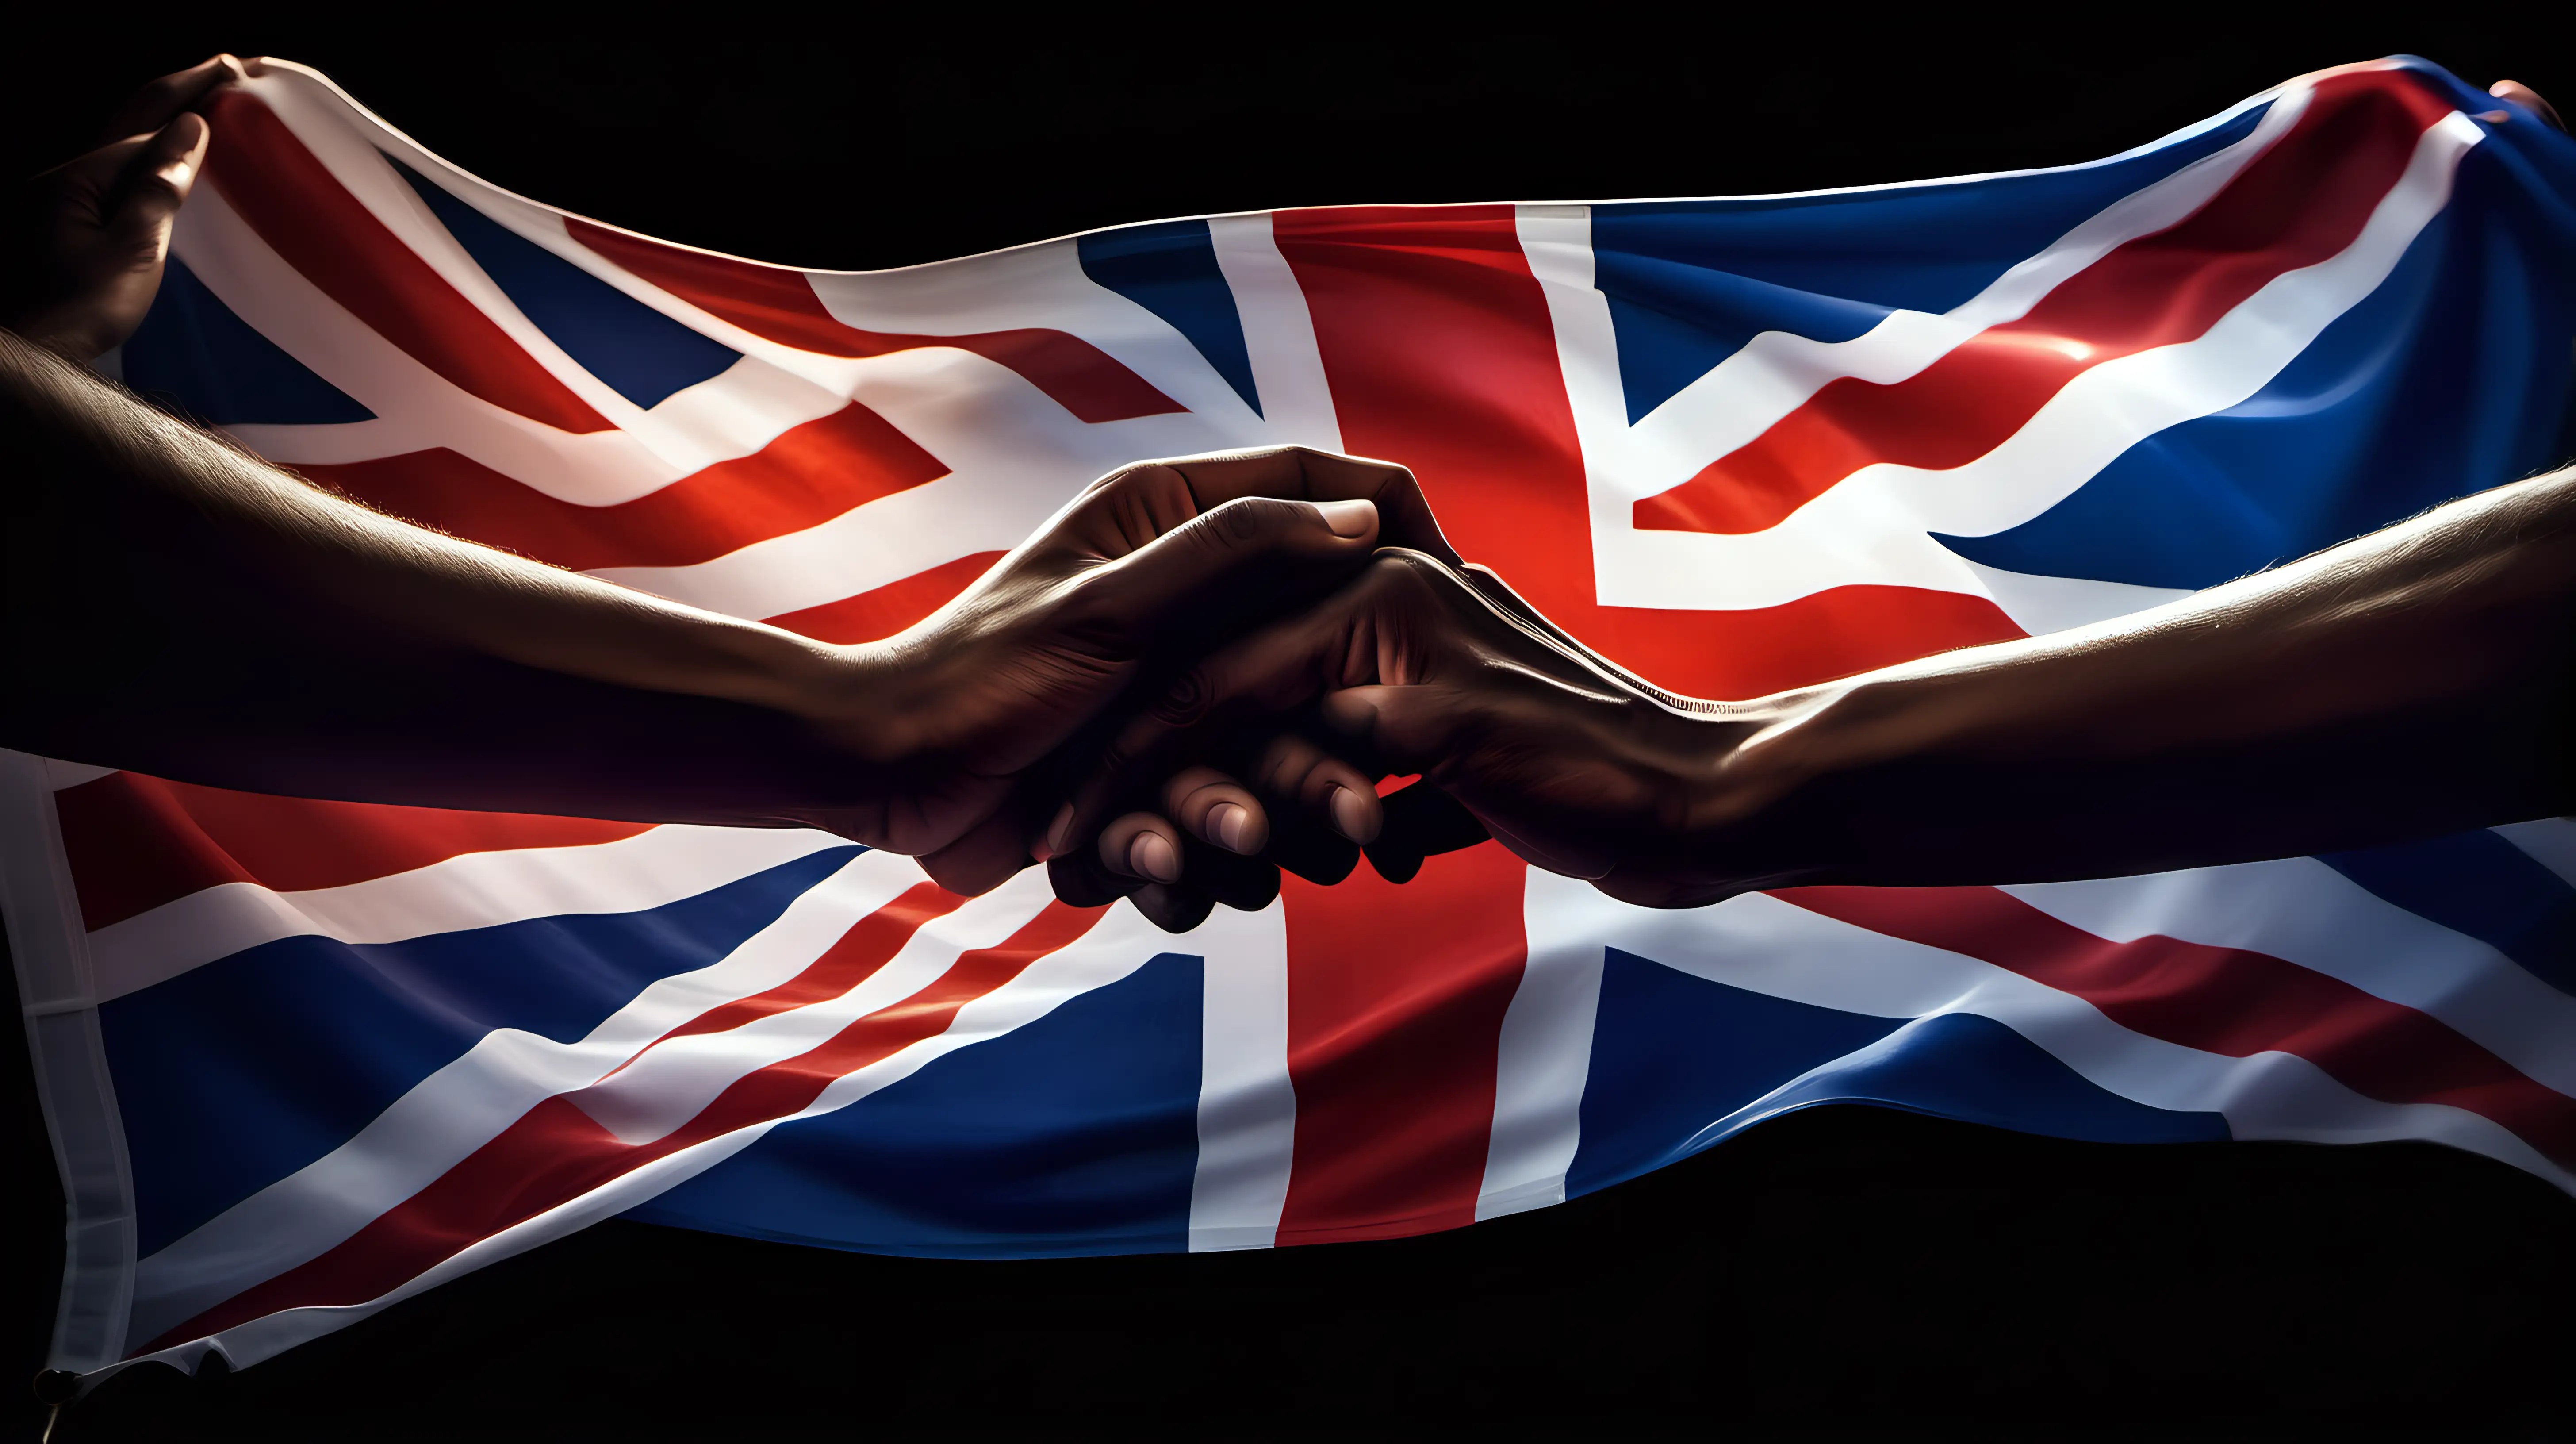 Patriotic Embrace Illuminated Hands Grasping Radiant United Kingdom Flag